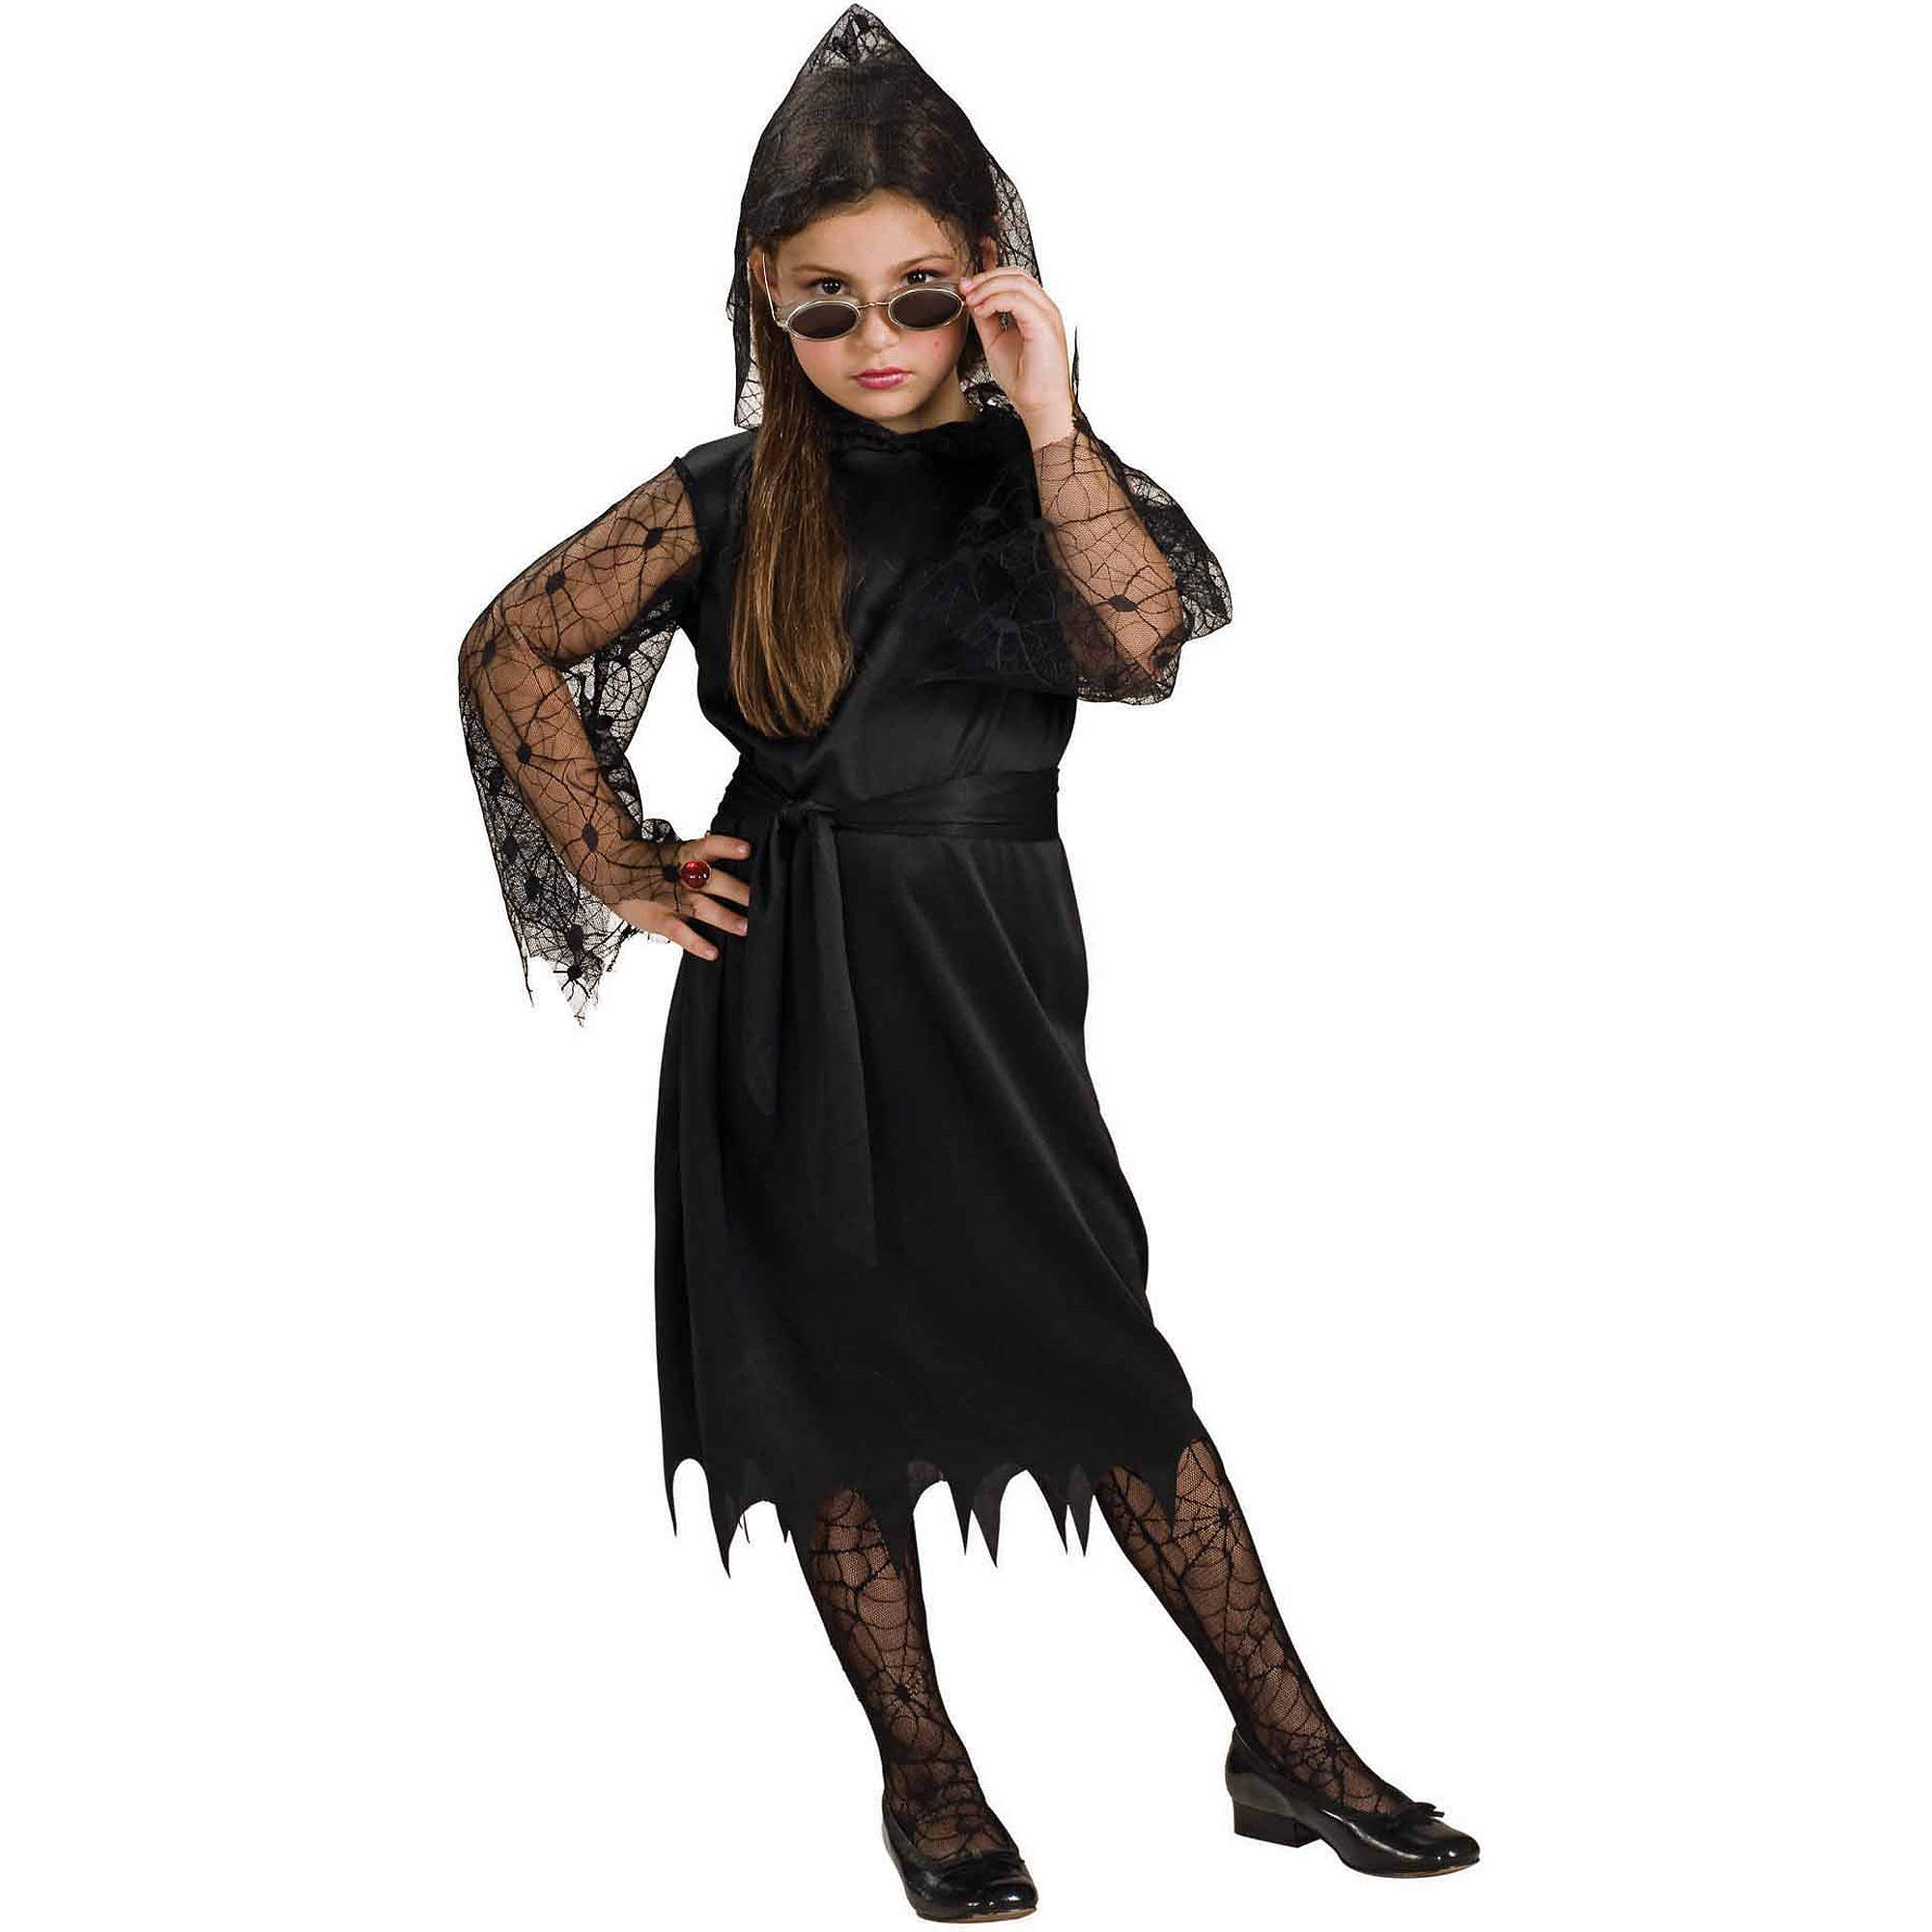 Gothic Lace Vampire Girls Halloween Costume - image 1 of 2